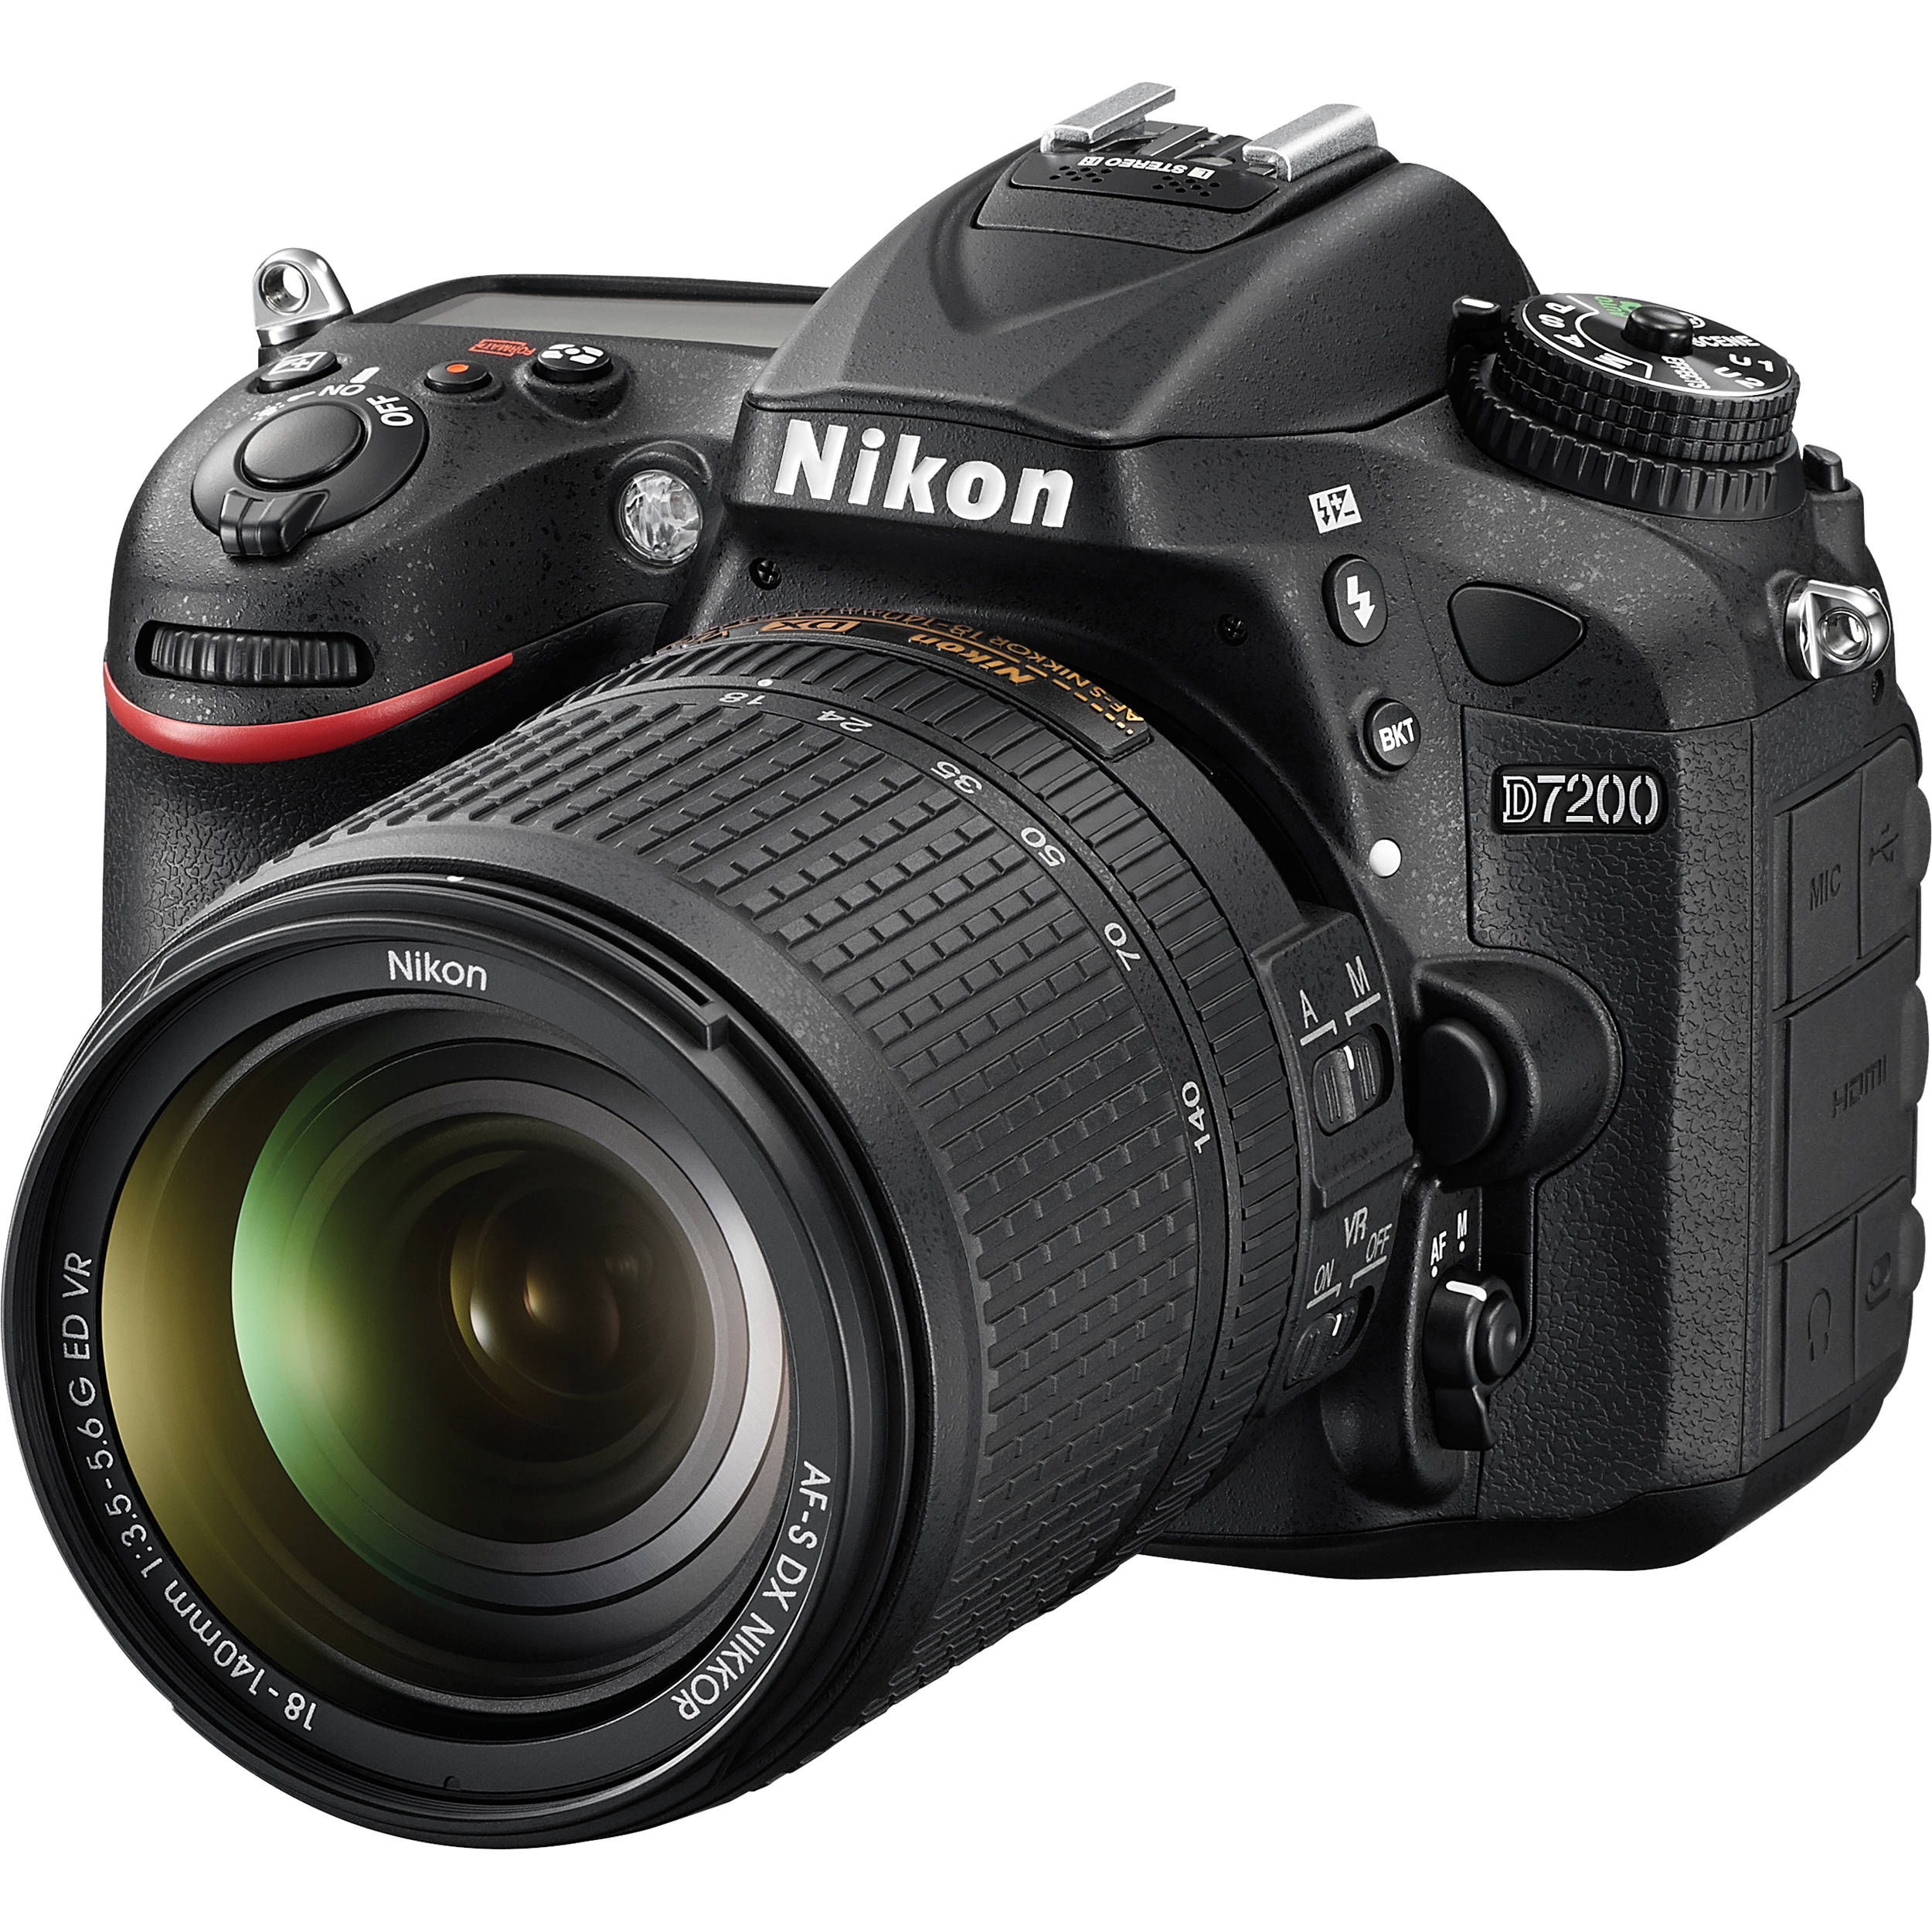 Nikon D7200 DSLR Camera with 18-140mm Lens 1555 (International Model) + EN-EL15 Replacement Li-on Battery + 32GB SDHC Class 10 Memory Card + Universal Wireless Remote Shutter Release Bundle